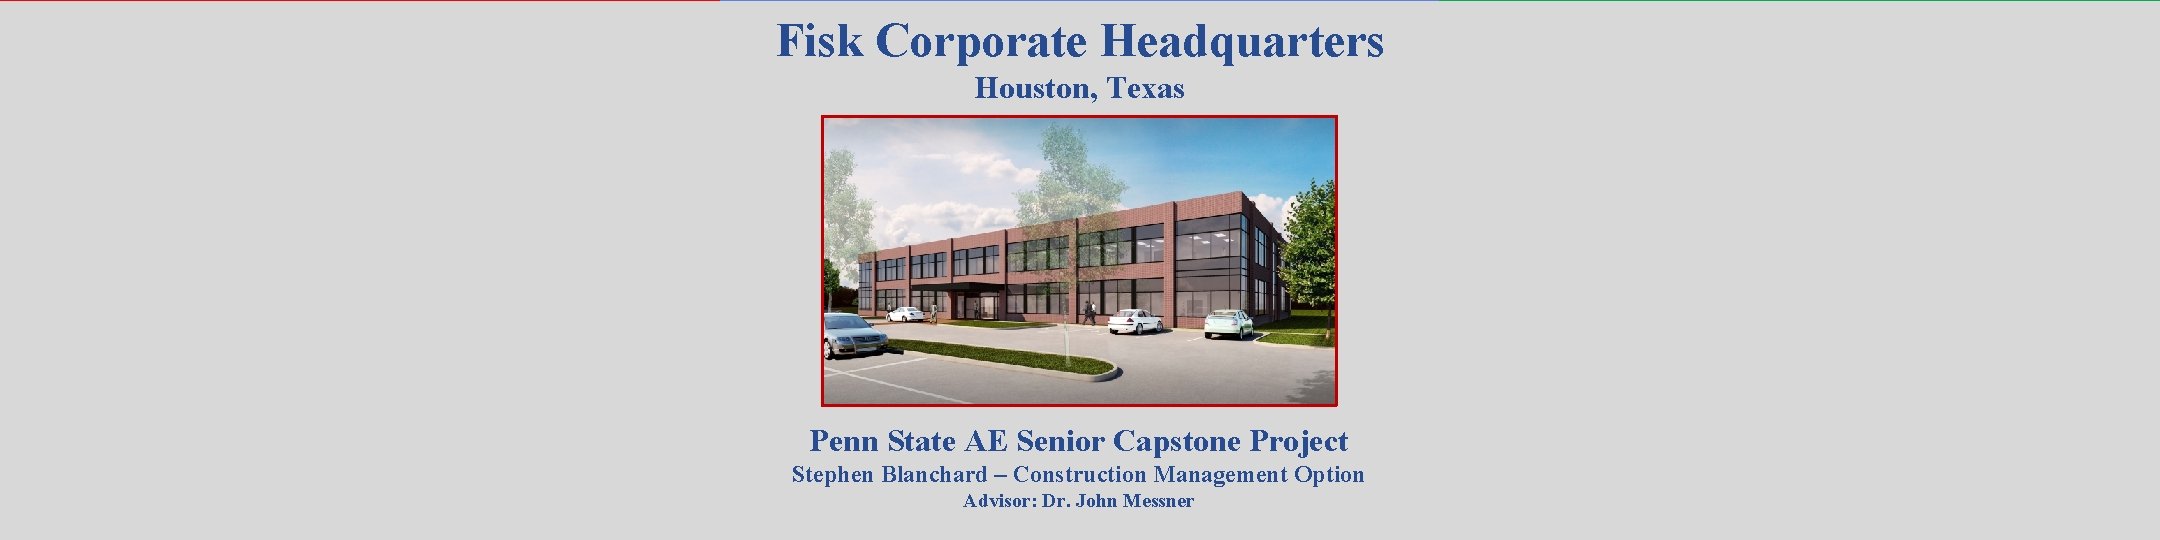 Fisk Corporate Headquarters Houston, Texas Penn State AE Senior Capstone Project Stephen Blanchard –